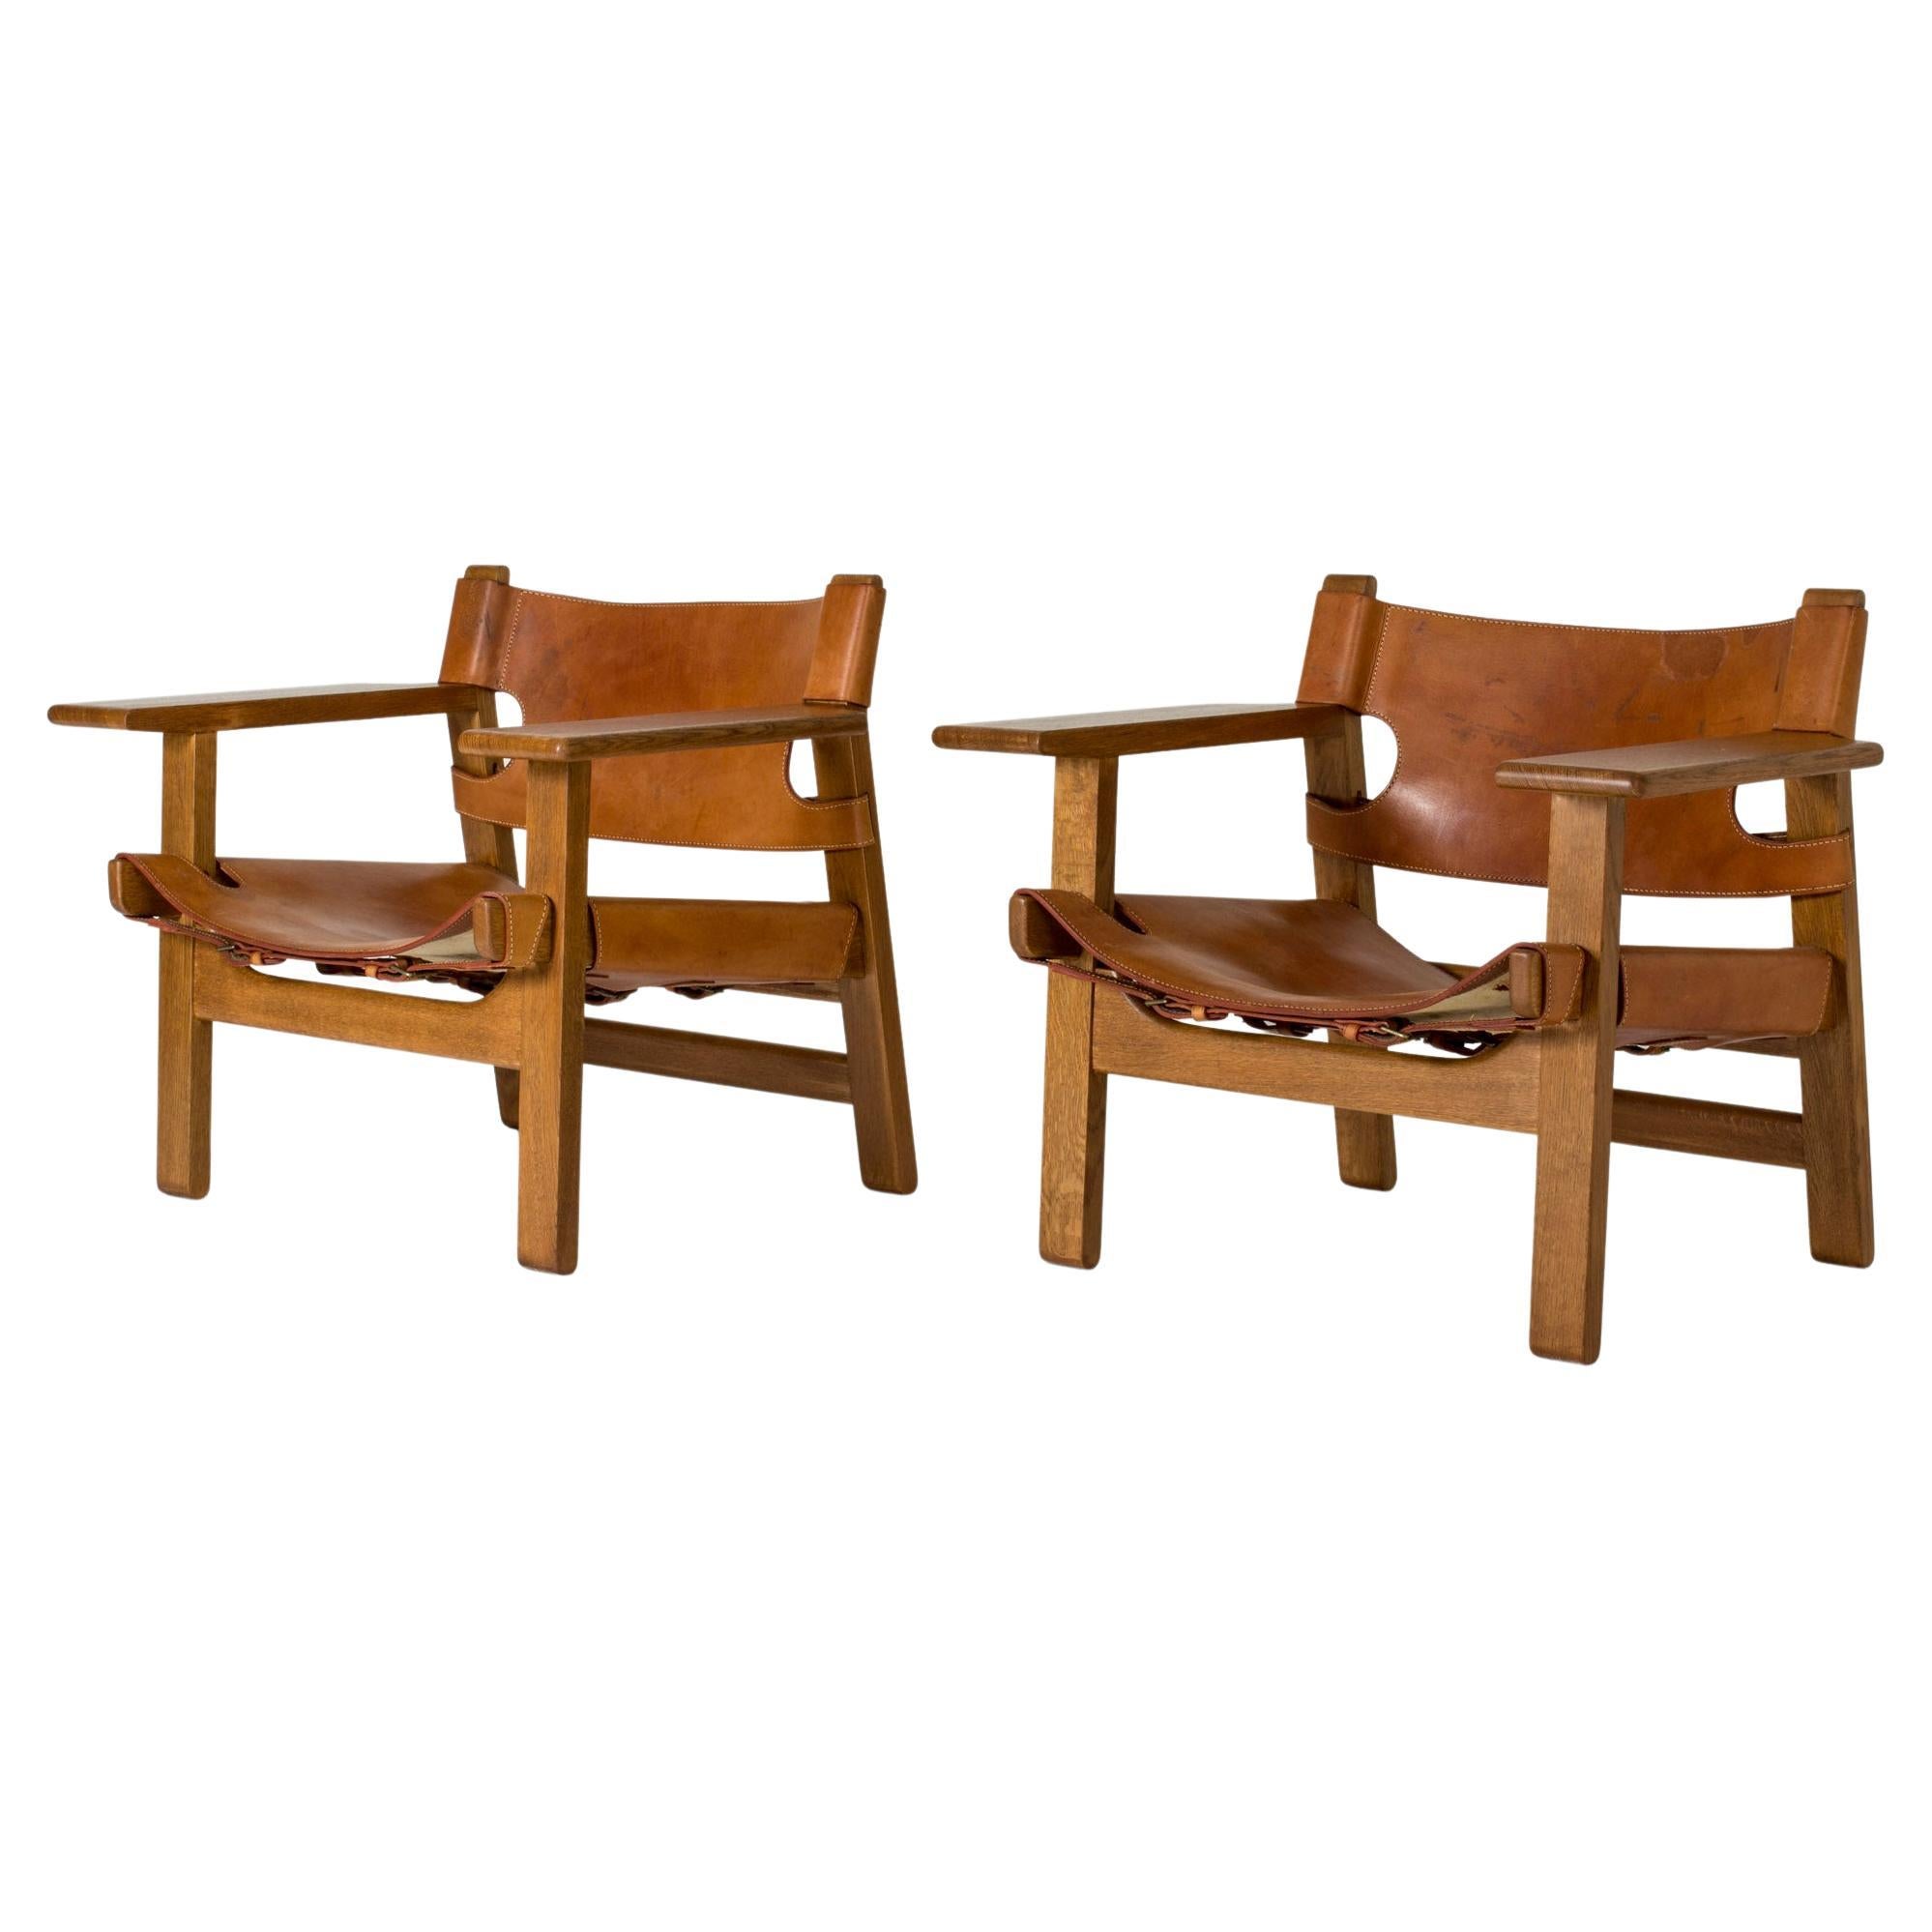 Vintage Midcentury "Spanish Chairs" by Børge Mogensen, Denmark, 1960s For Sale